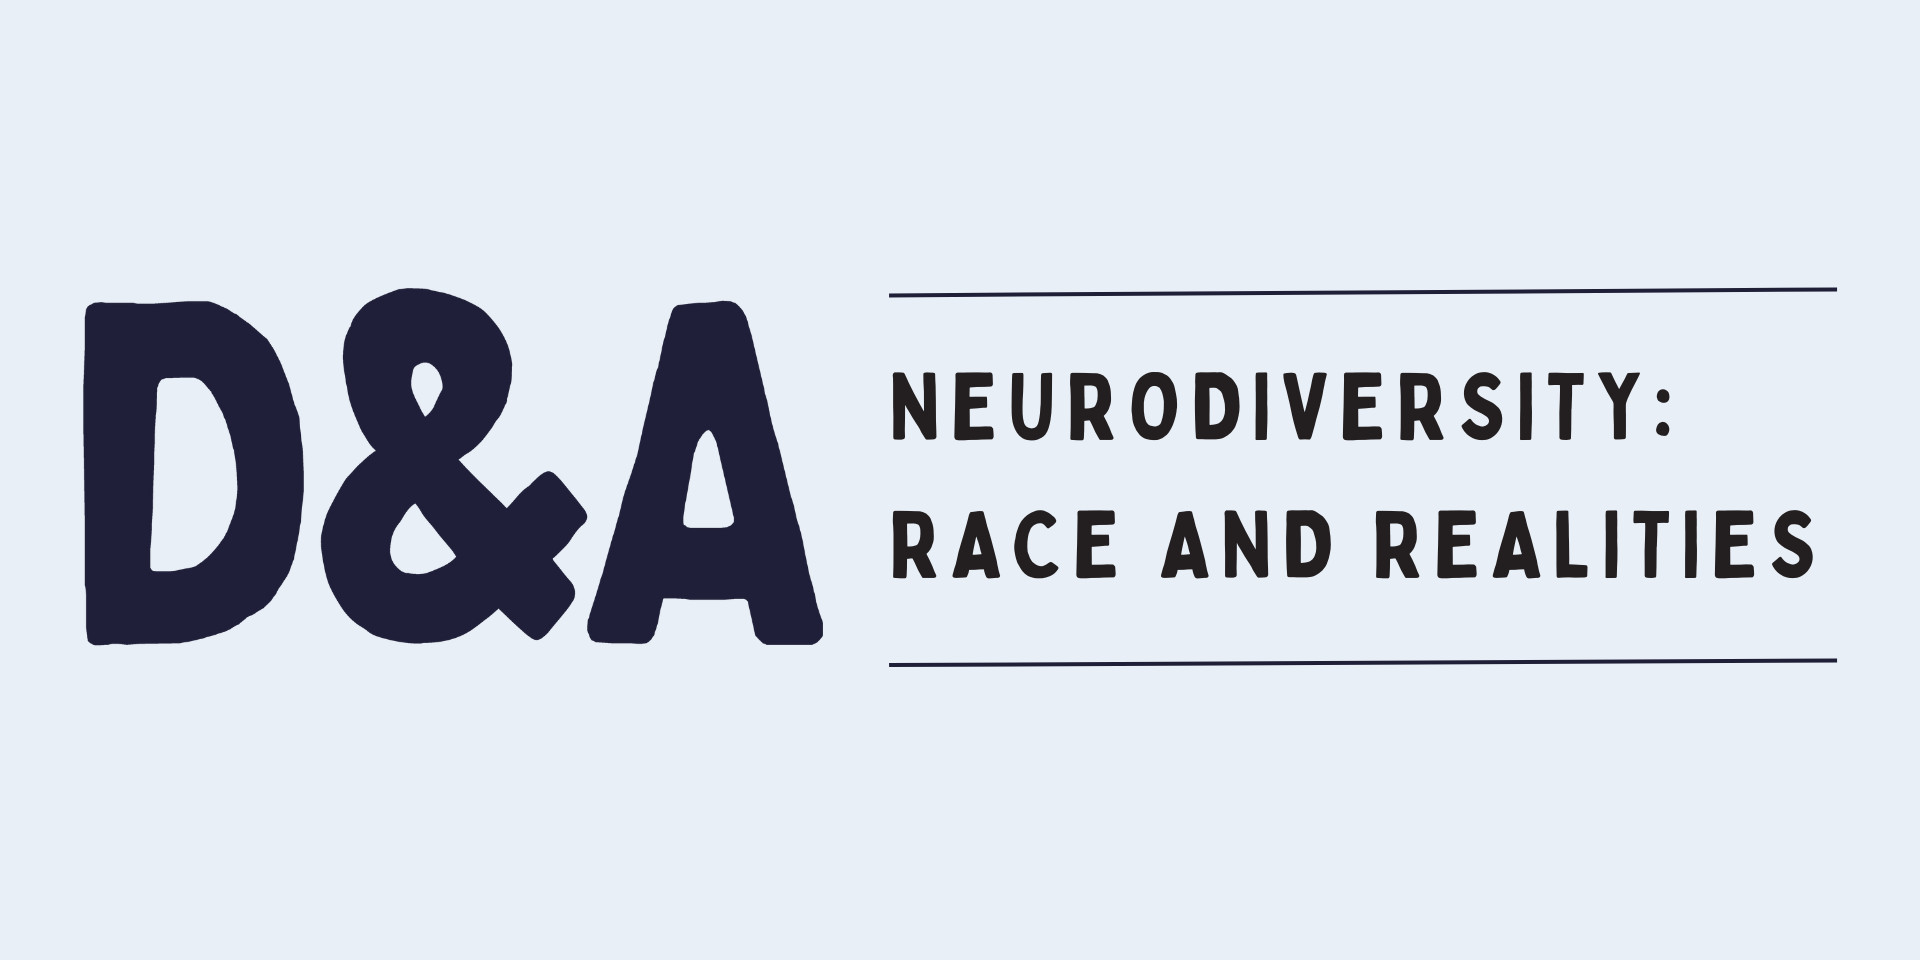 D&A: Neurodiversity Race and Realities